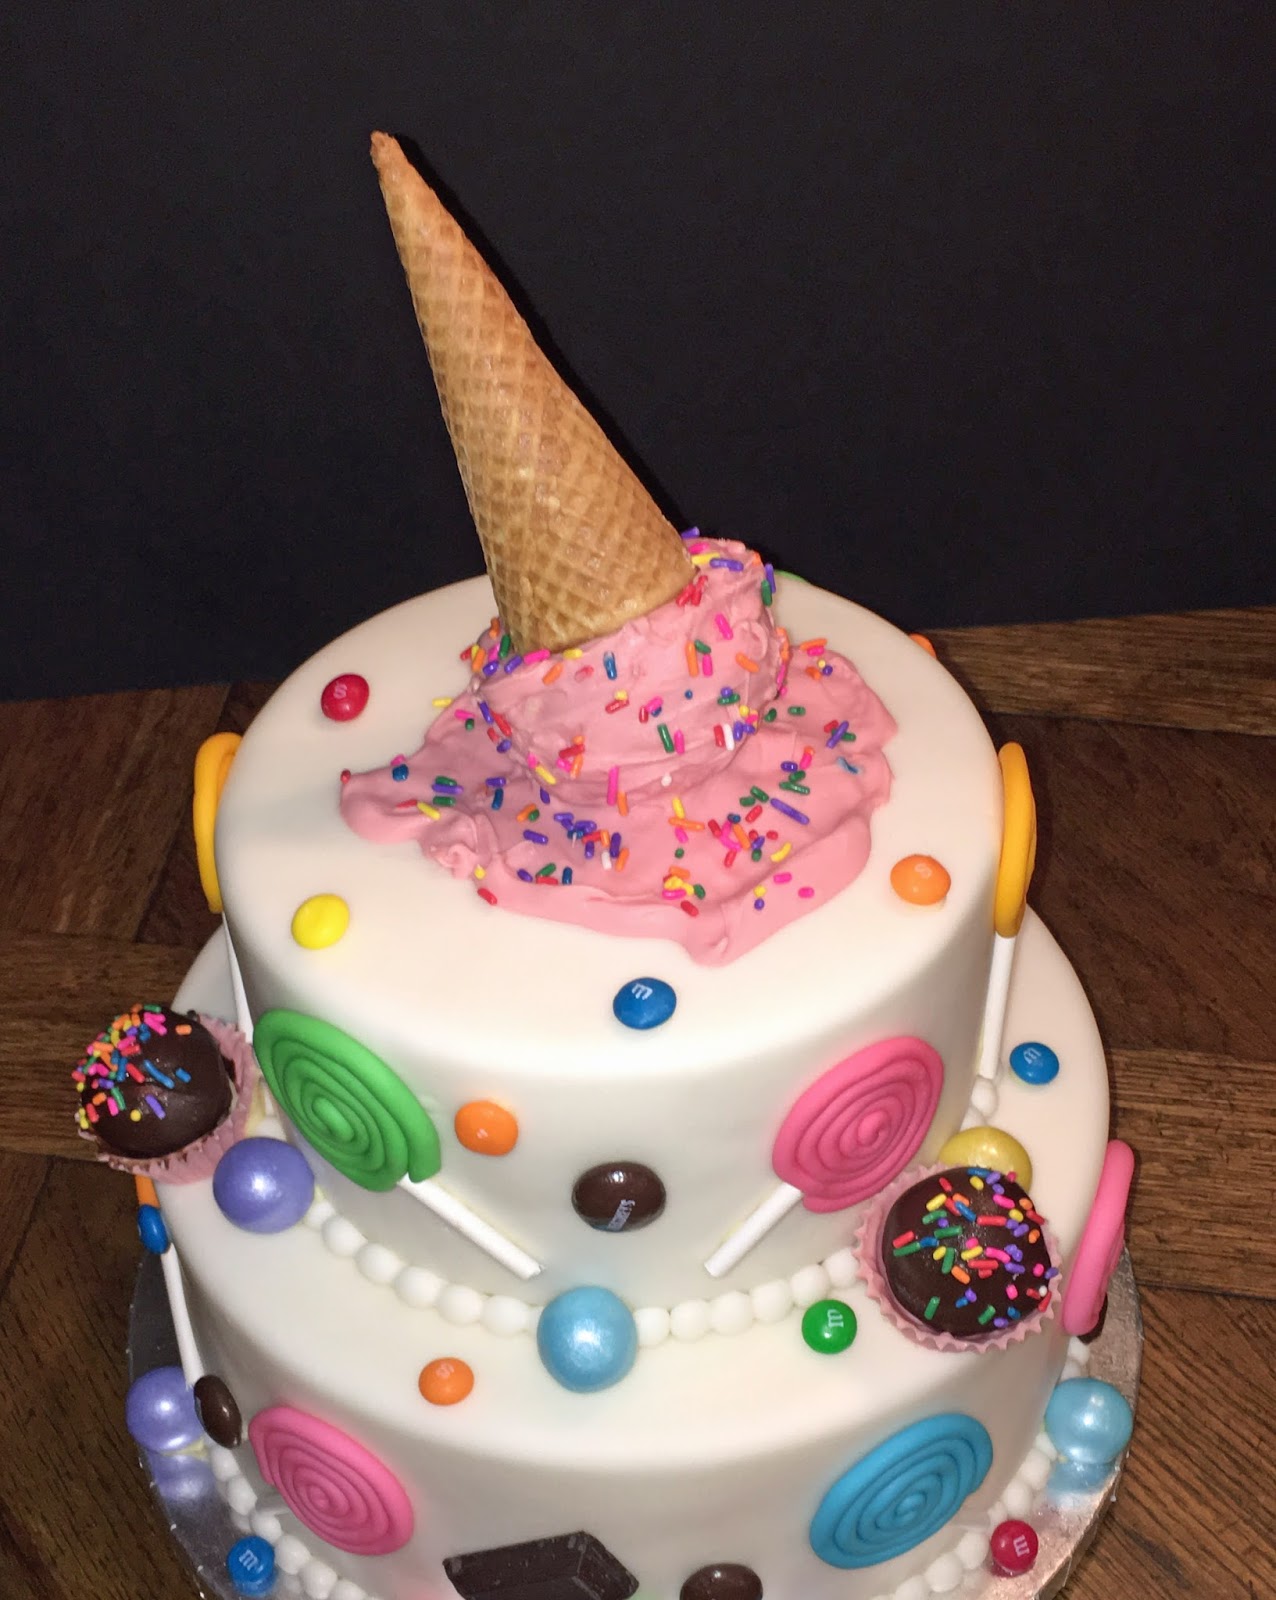 The Bake More: Melting Ice Cream Cone Cake